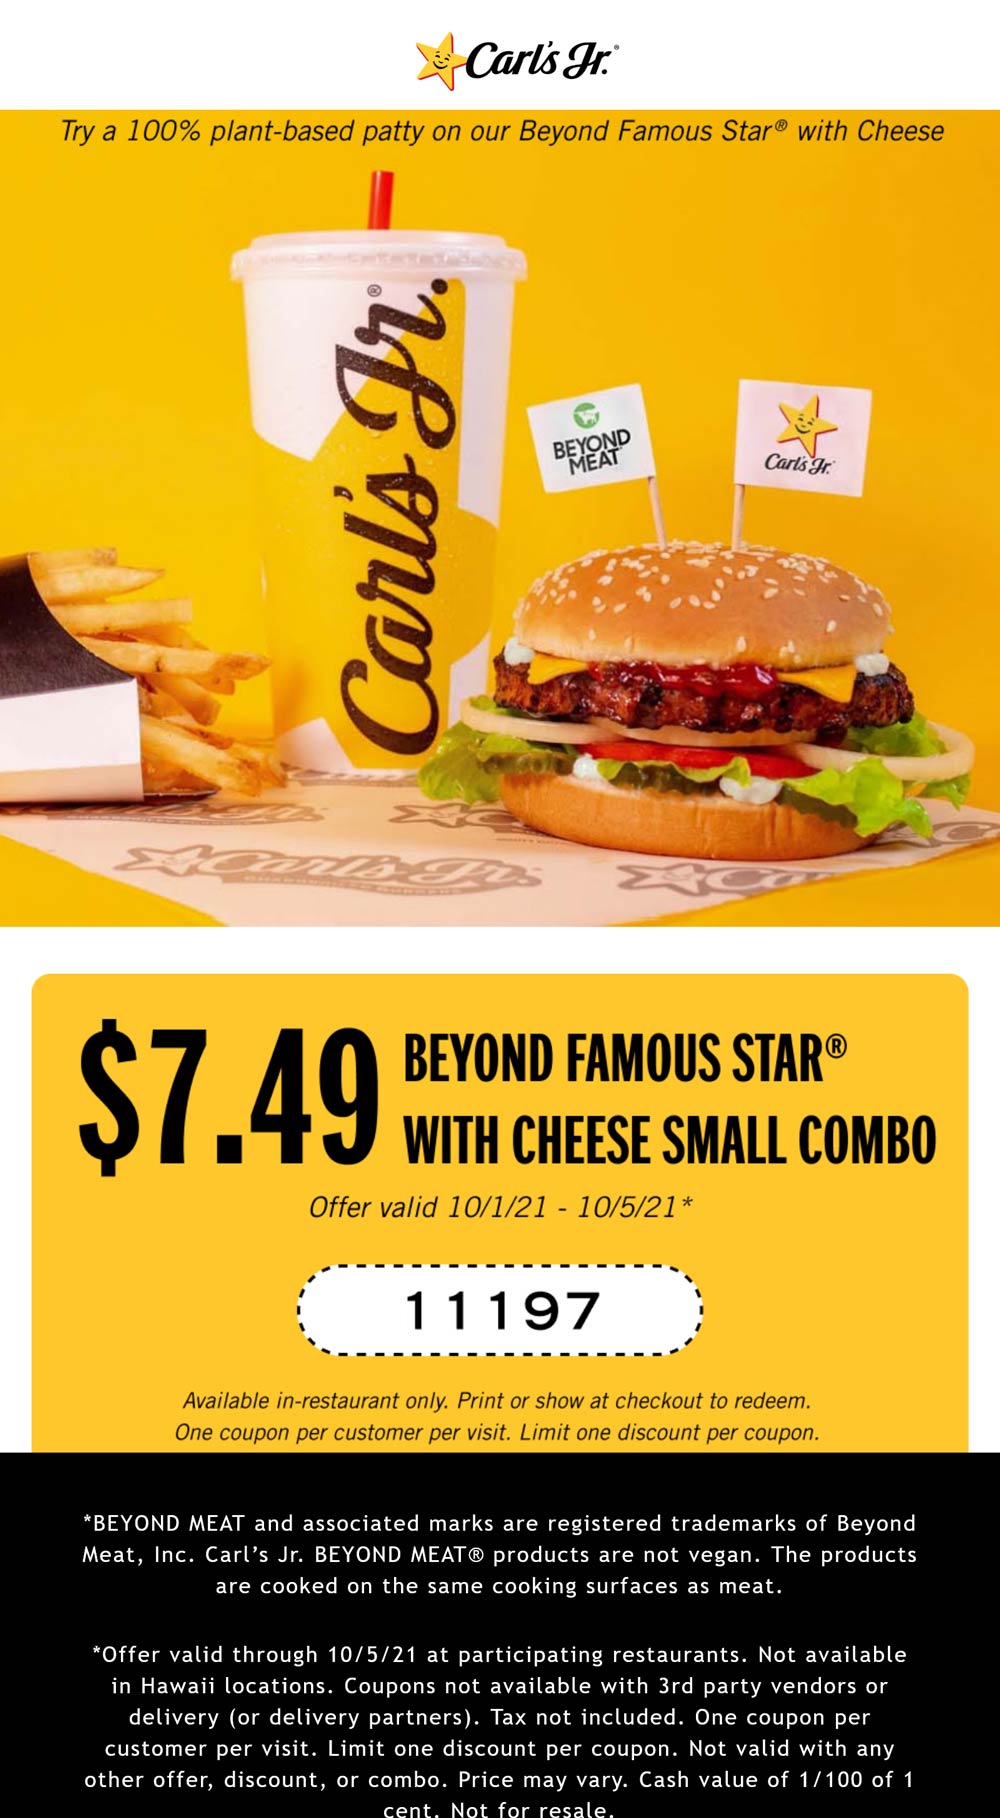 Carls Jr restaurants Coupon  Beyond meat cheeseburger meal for $8 at Carls Jr #carlsjr 